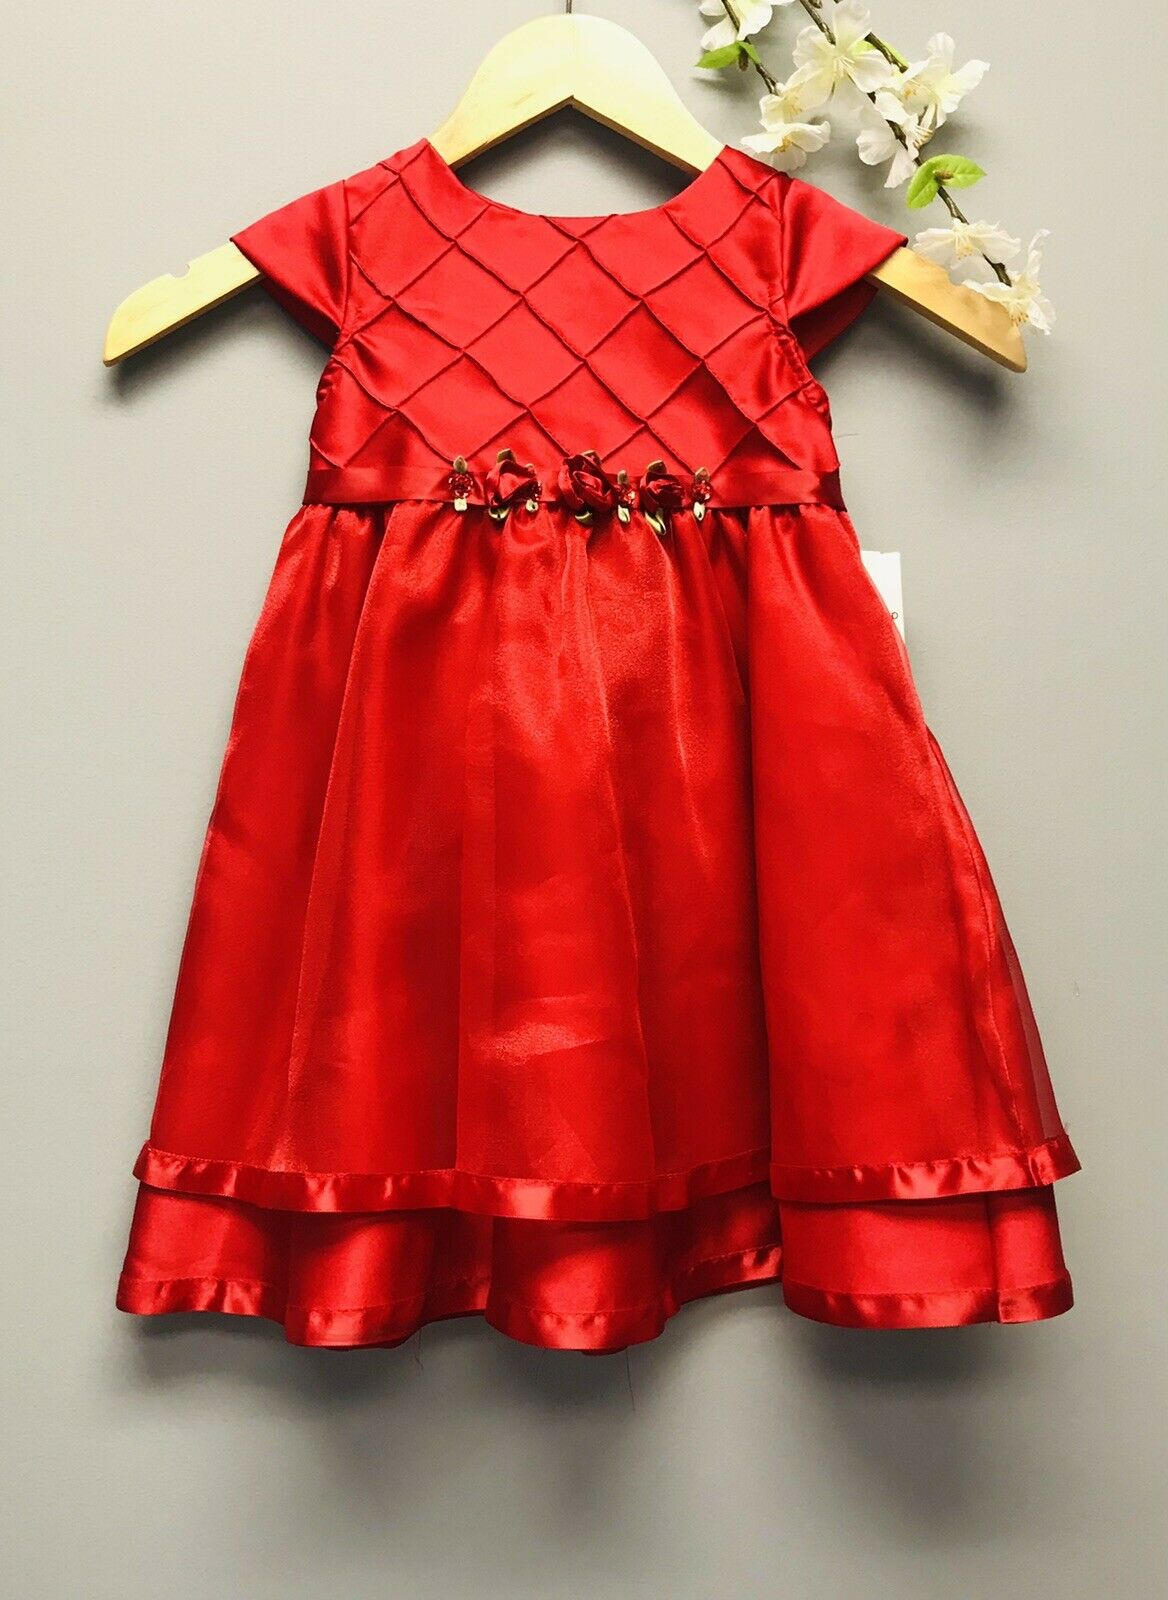 Rare Edition Dress Girl Baby Toddler Holiday Christmas Dressy Size 2t [u]